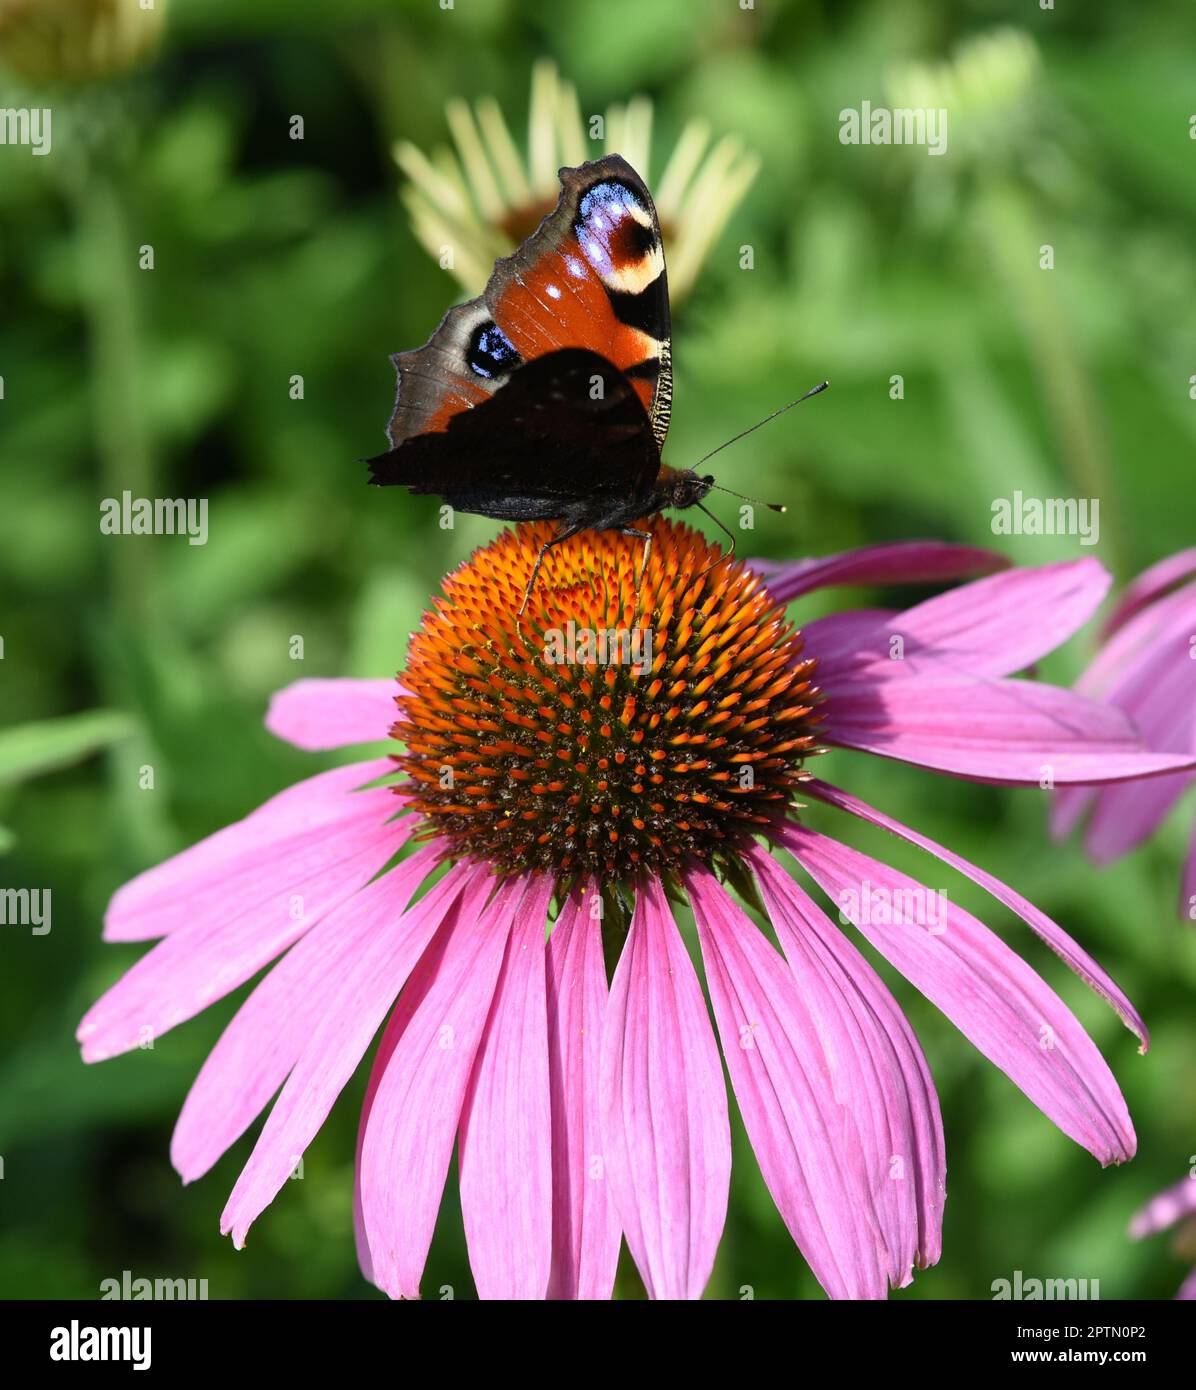 Schmetterlinge sind Insekten mit grossen Fluegeln. Butterflies are insects with large wings. Stock Photo